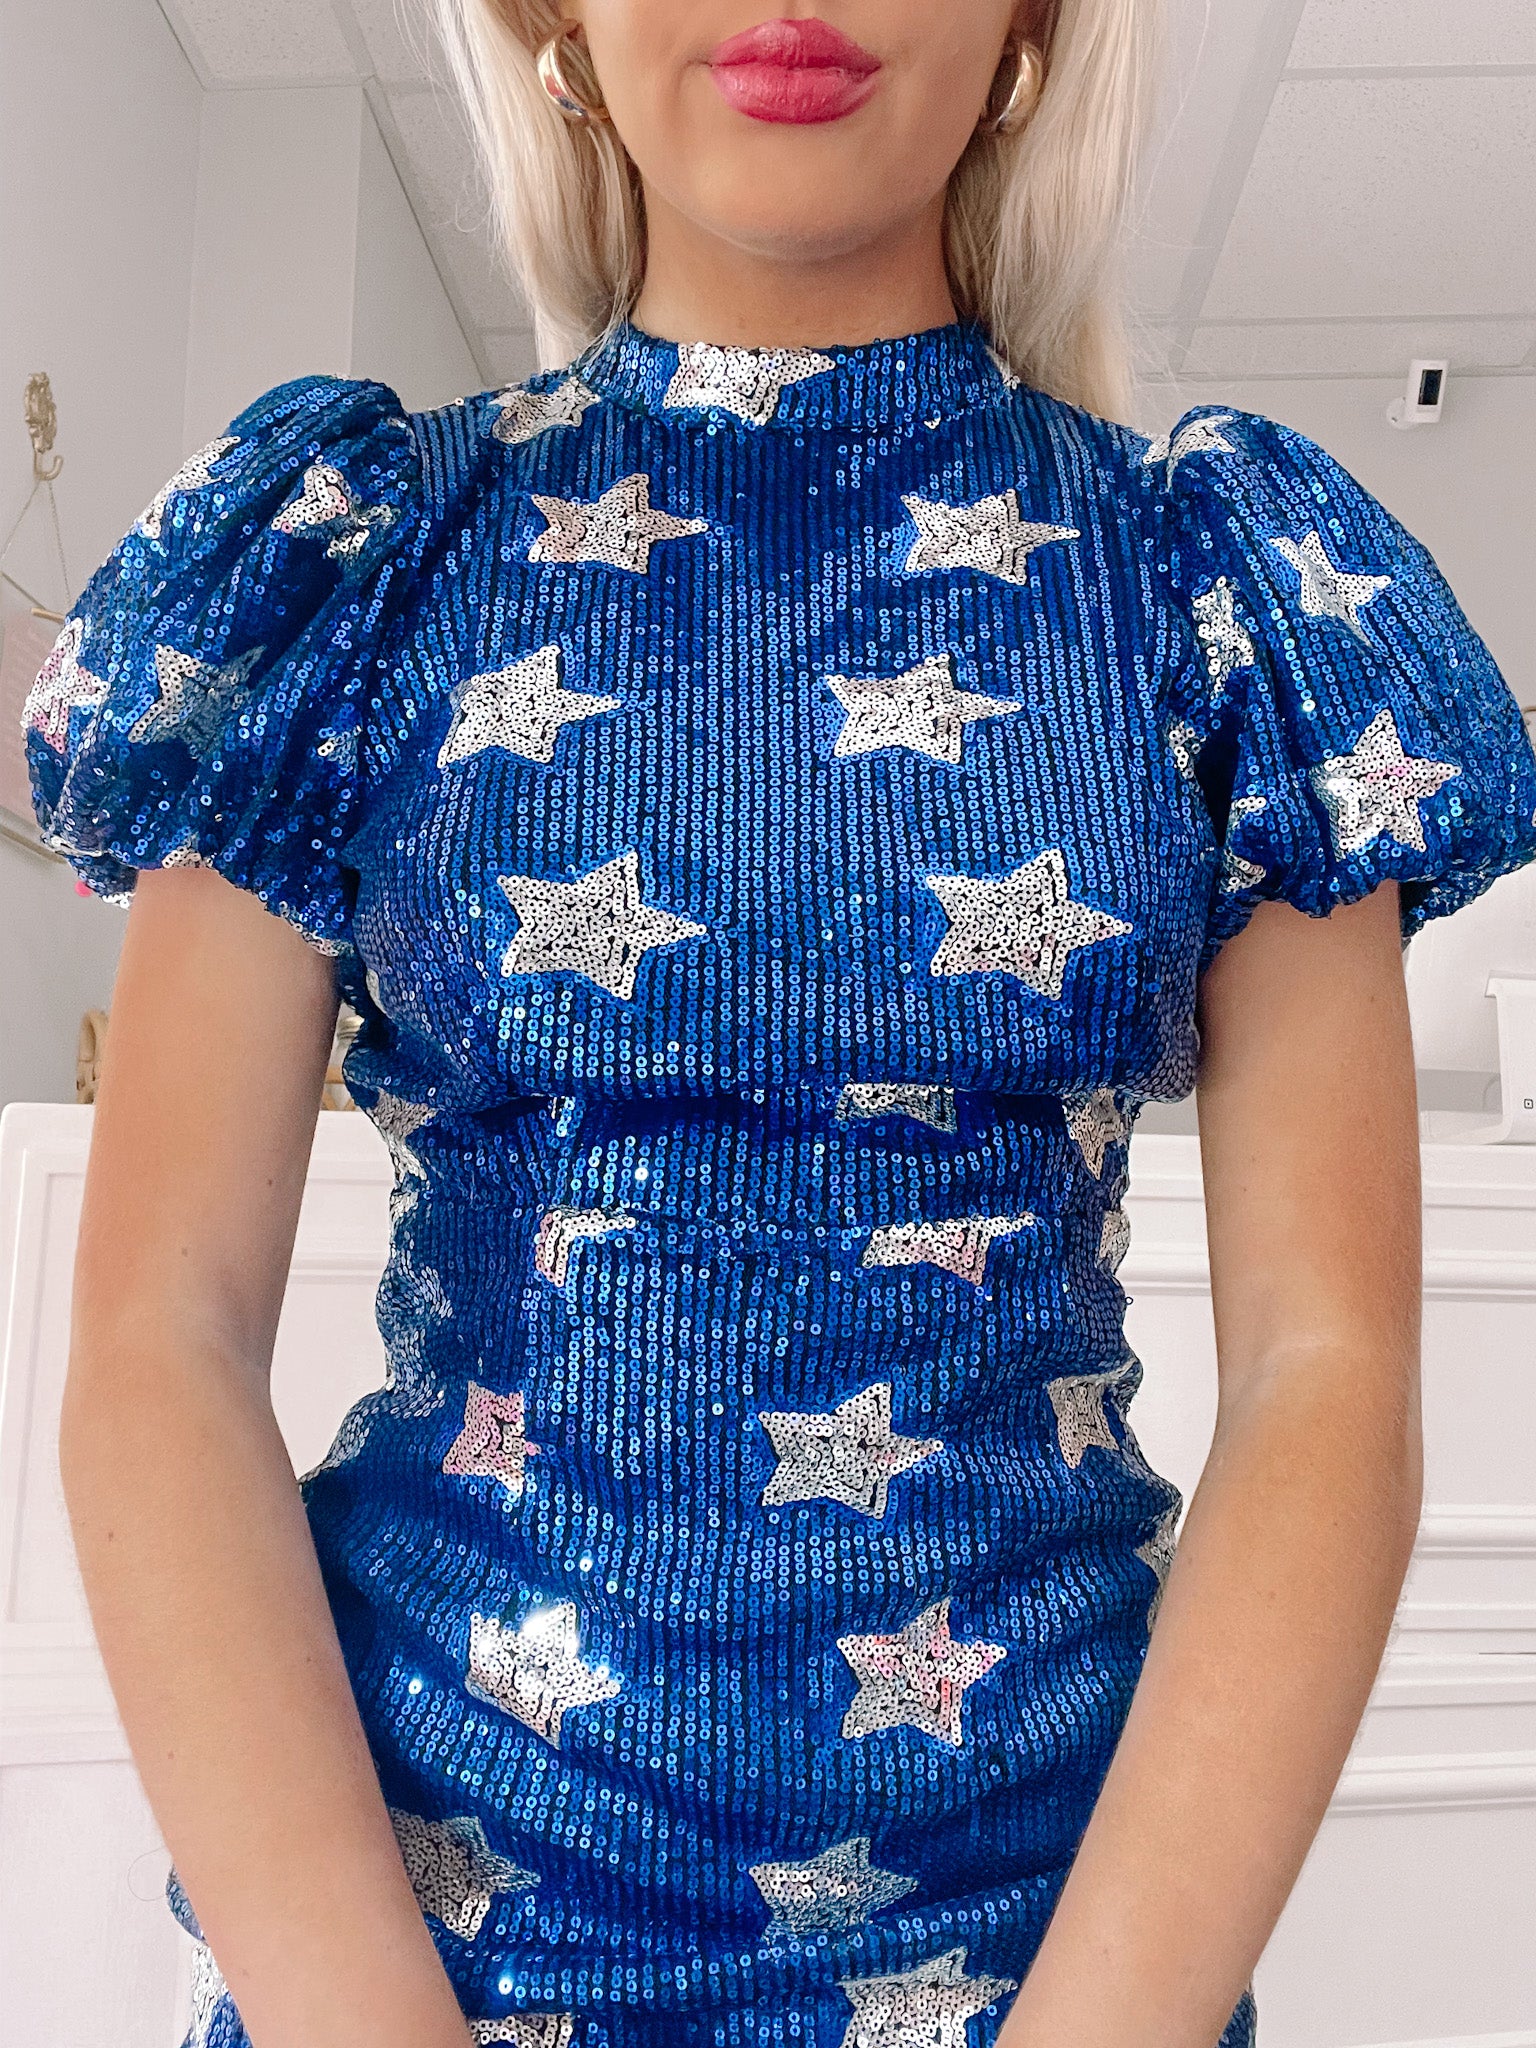 Stargirl Blue Sequin Dress | Sassy Shortcake | sassyshortcake.com